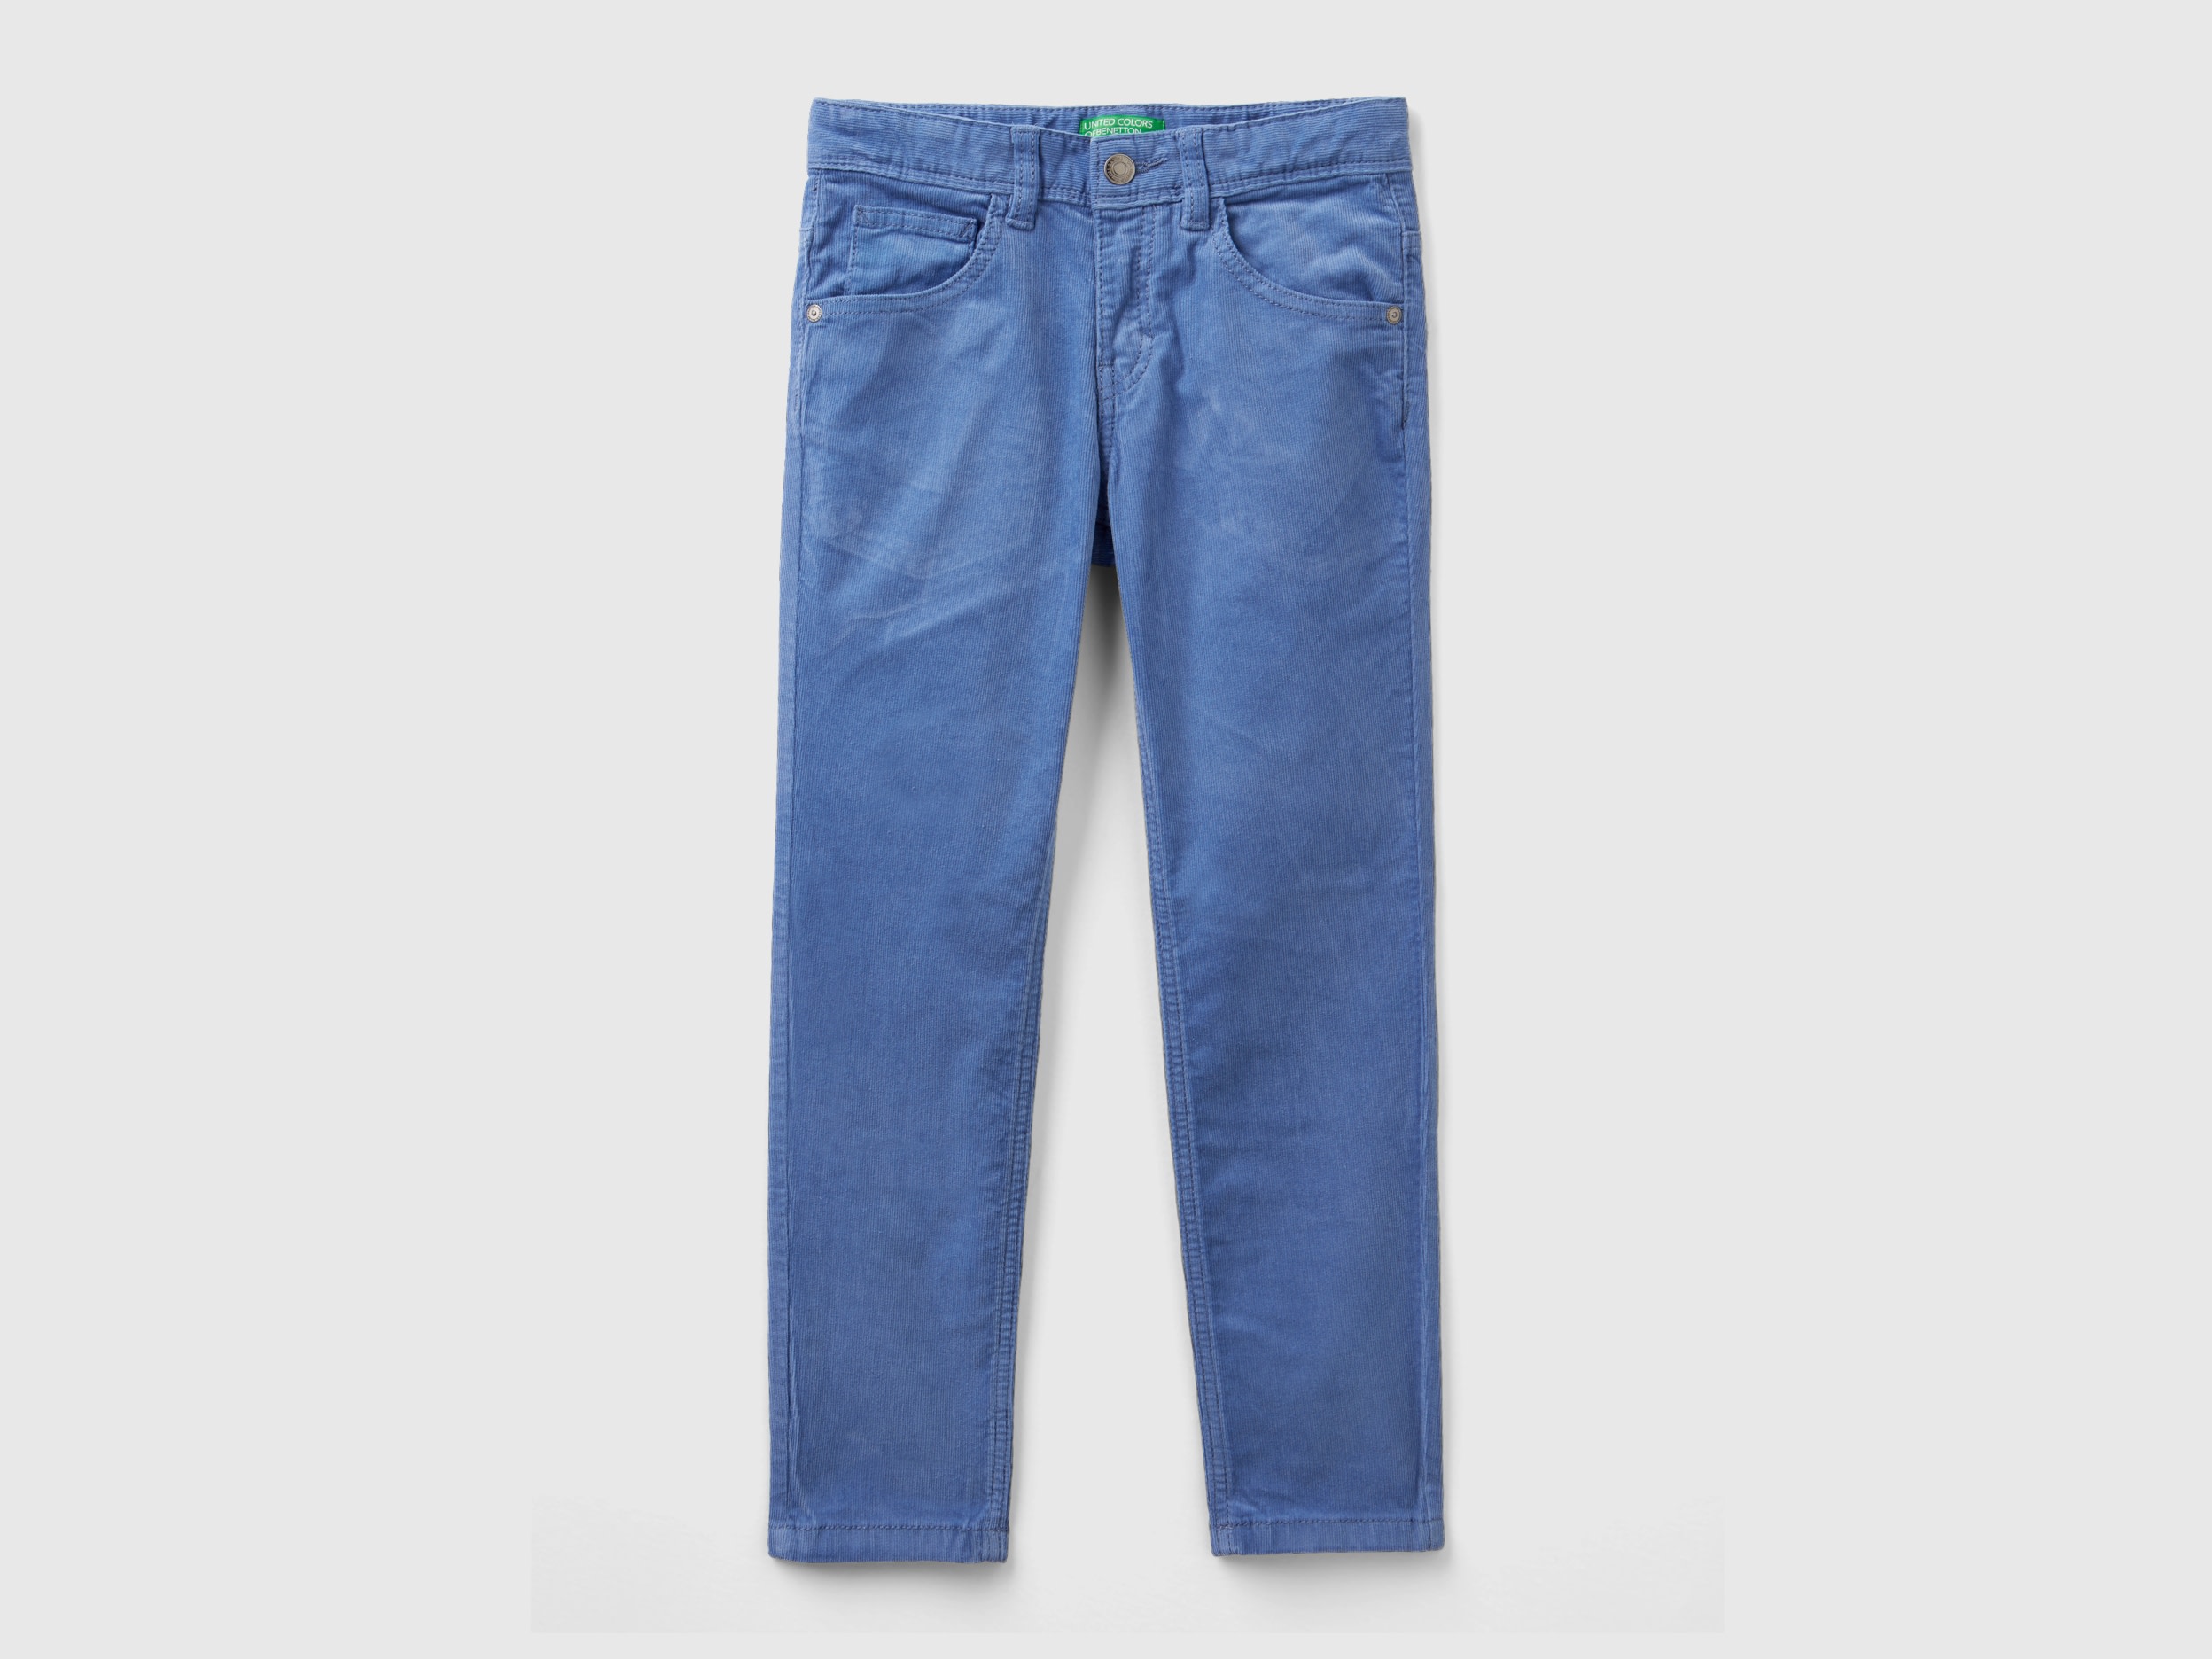 Benetton, Slim Fit Stretch Corduroy Trousers, size 3XL, Light Blue, Kids